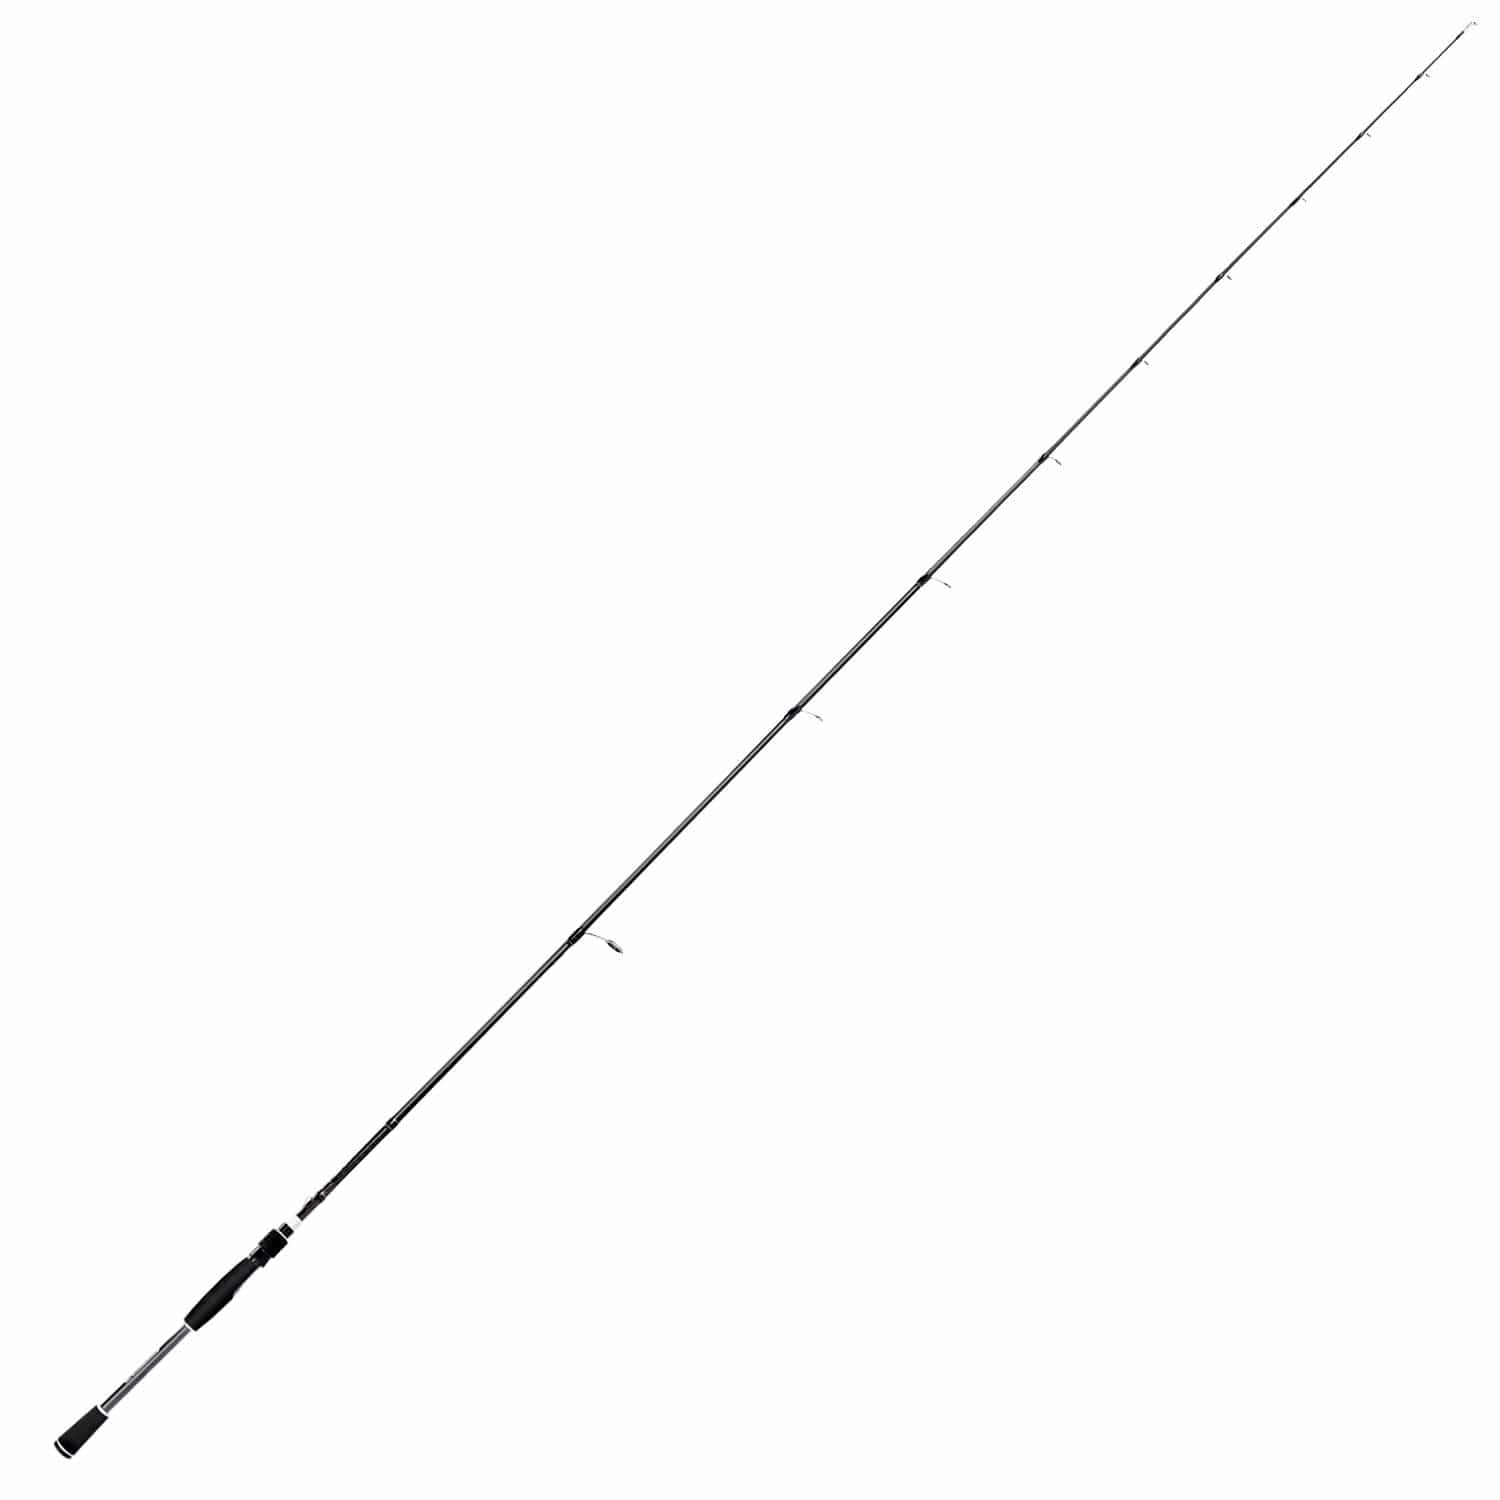 KastKing Perigee II Fishing Rods - Spinning / 6'7 / Fast-Medium-1Pc